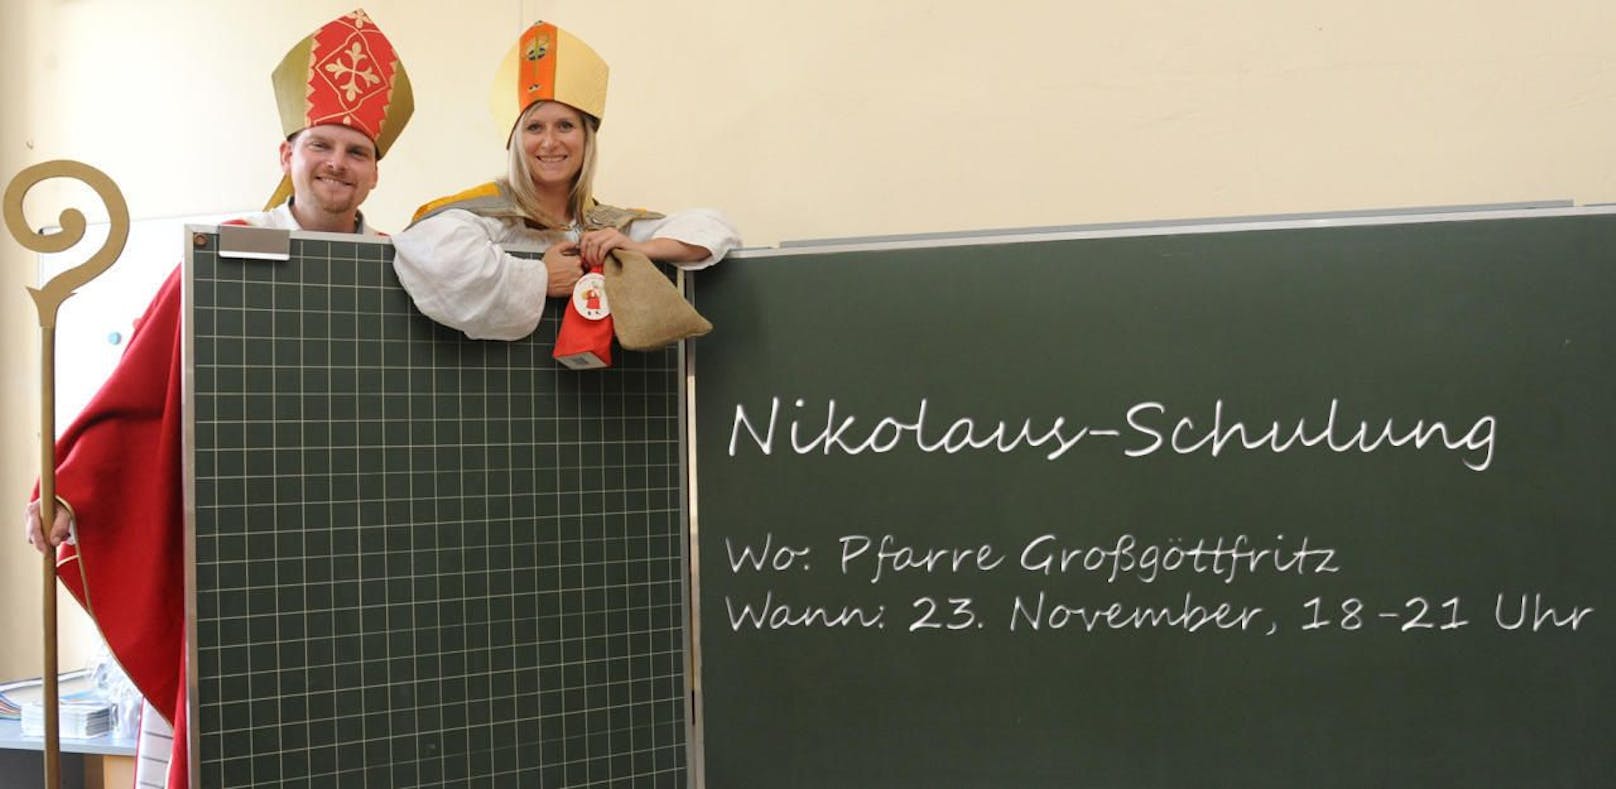 Katholische Jungschar und Katholische Männerbewegung laden am 23.November zur Nikolaus-Schulung nach Großgöttfritz.